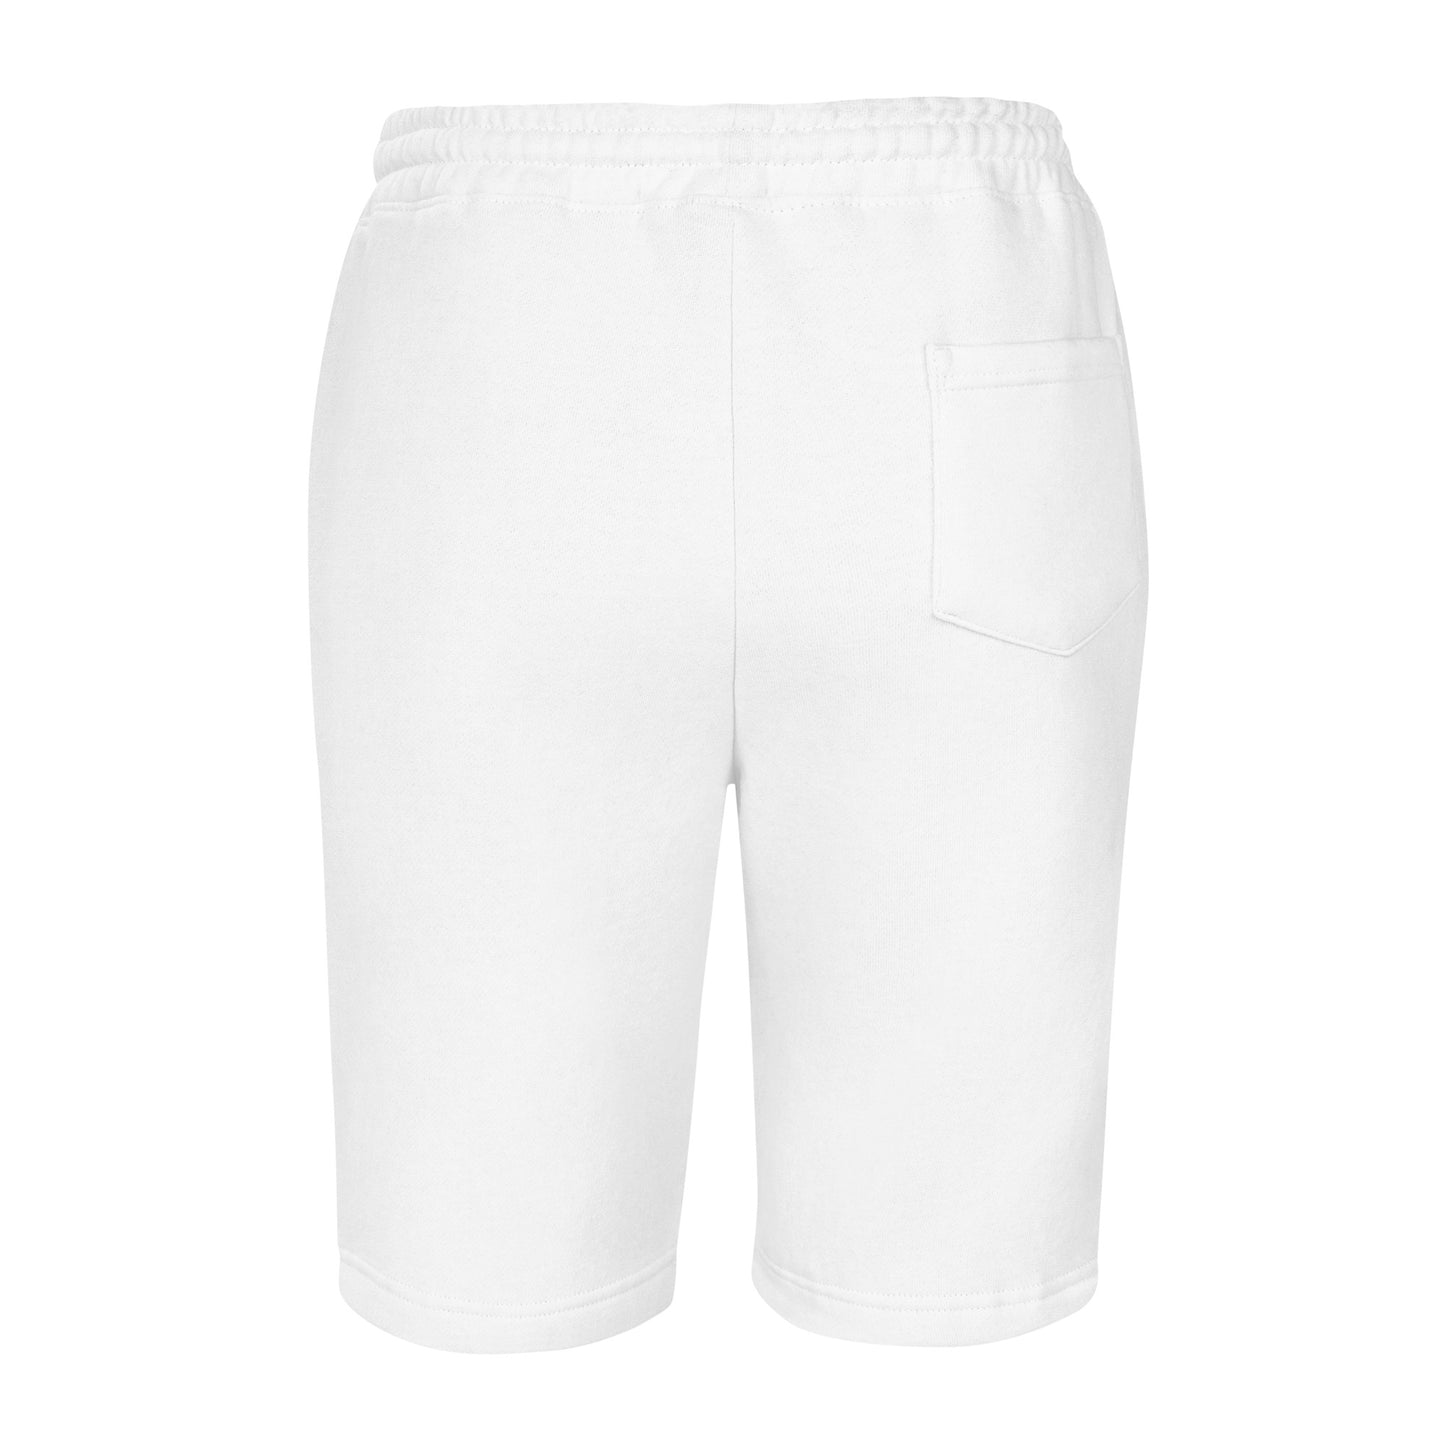 Men's fleece shorts (EMBROIDERED)